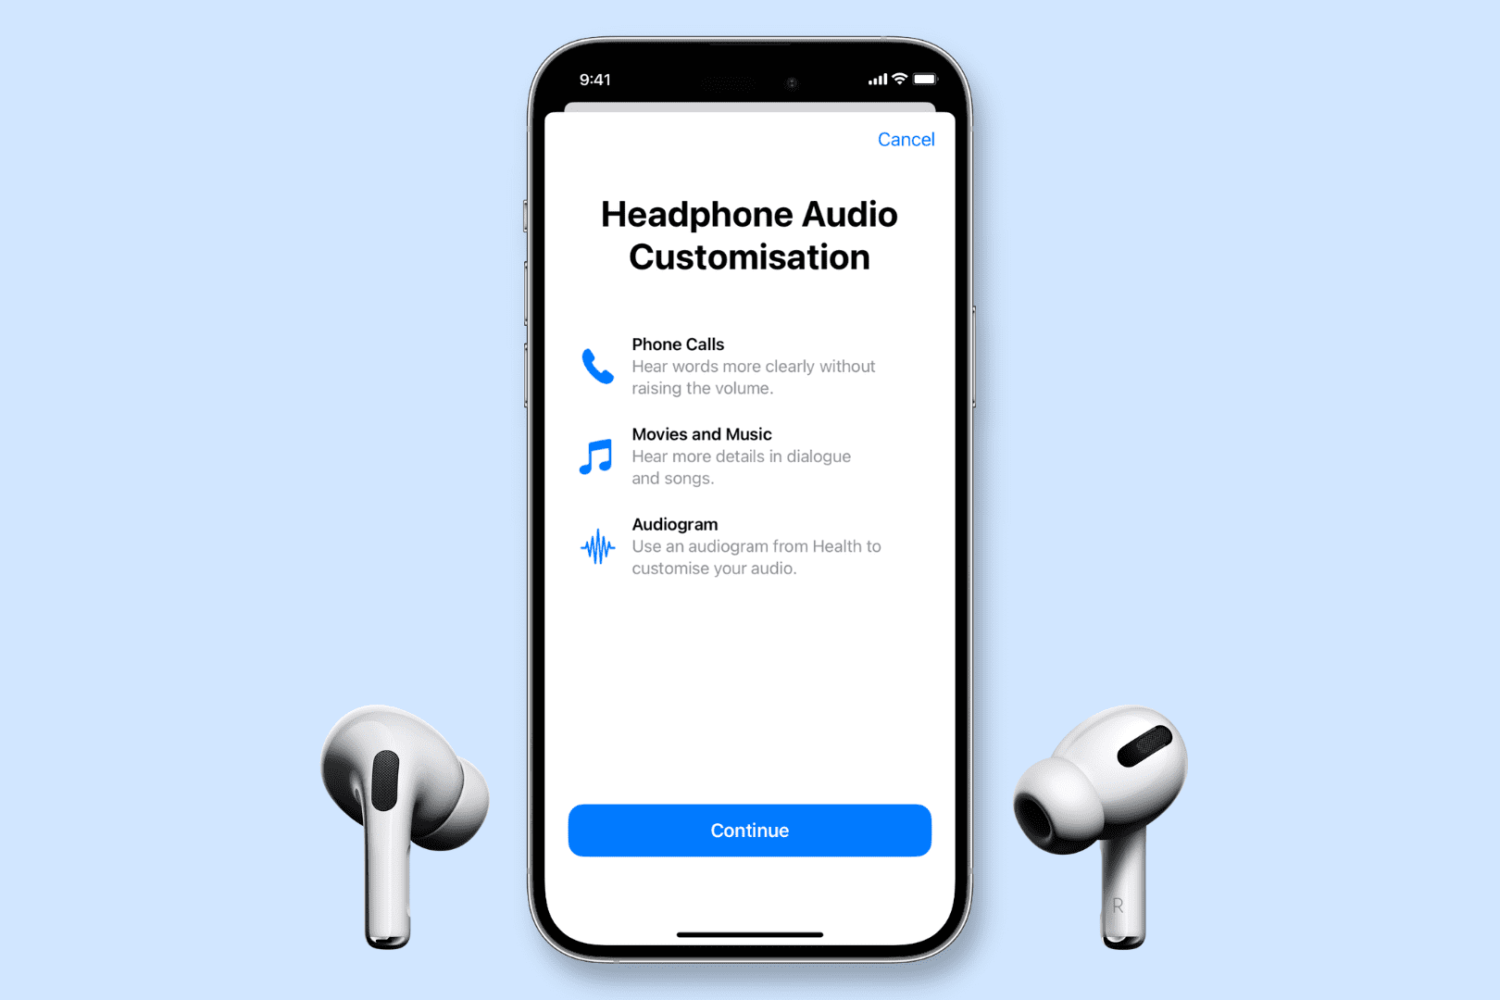 Headphone Audio Customization on iPhone